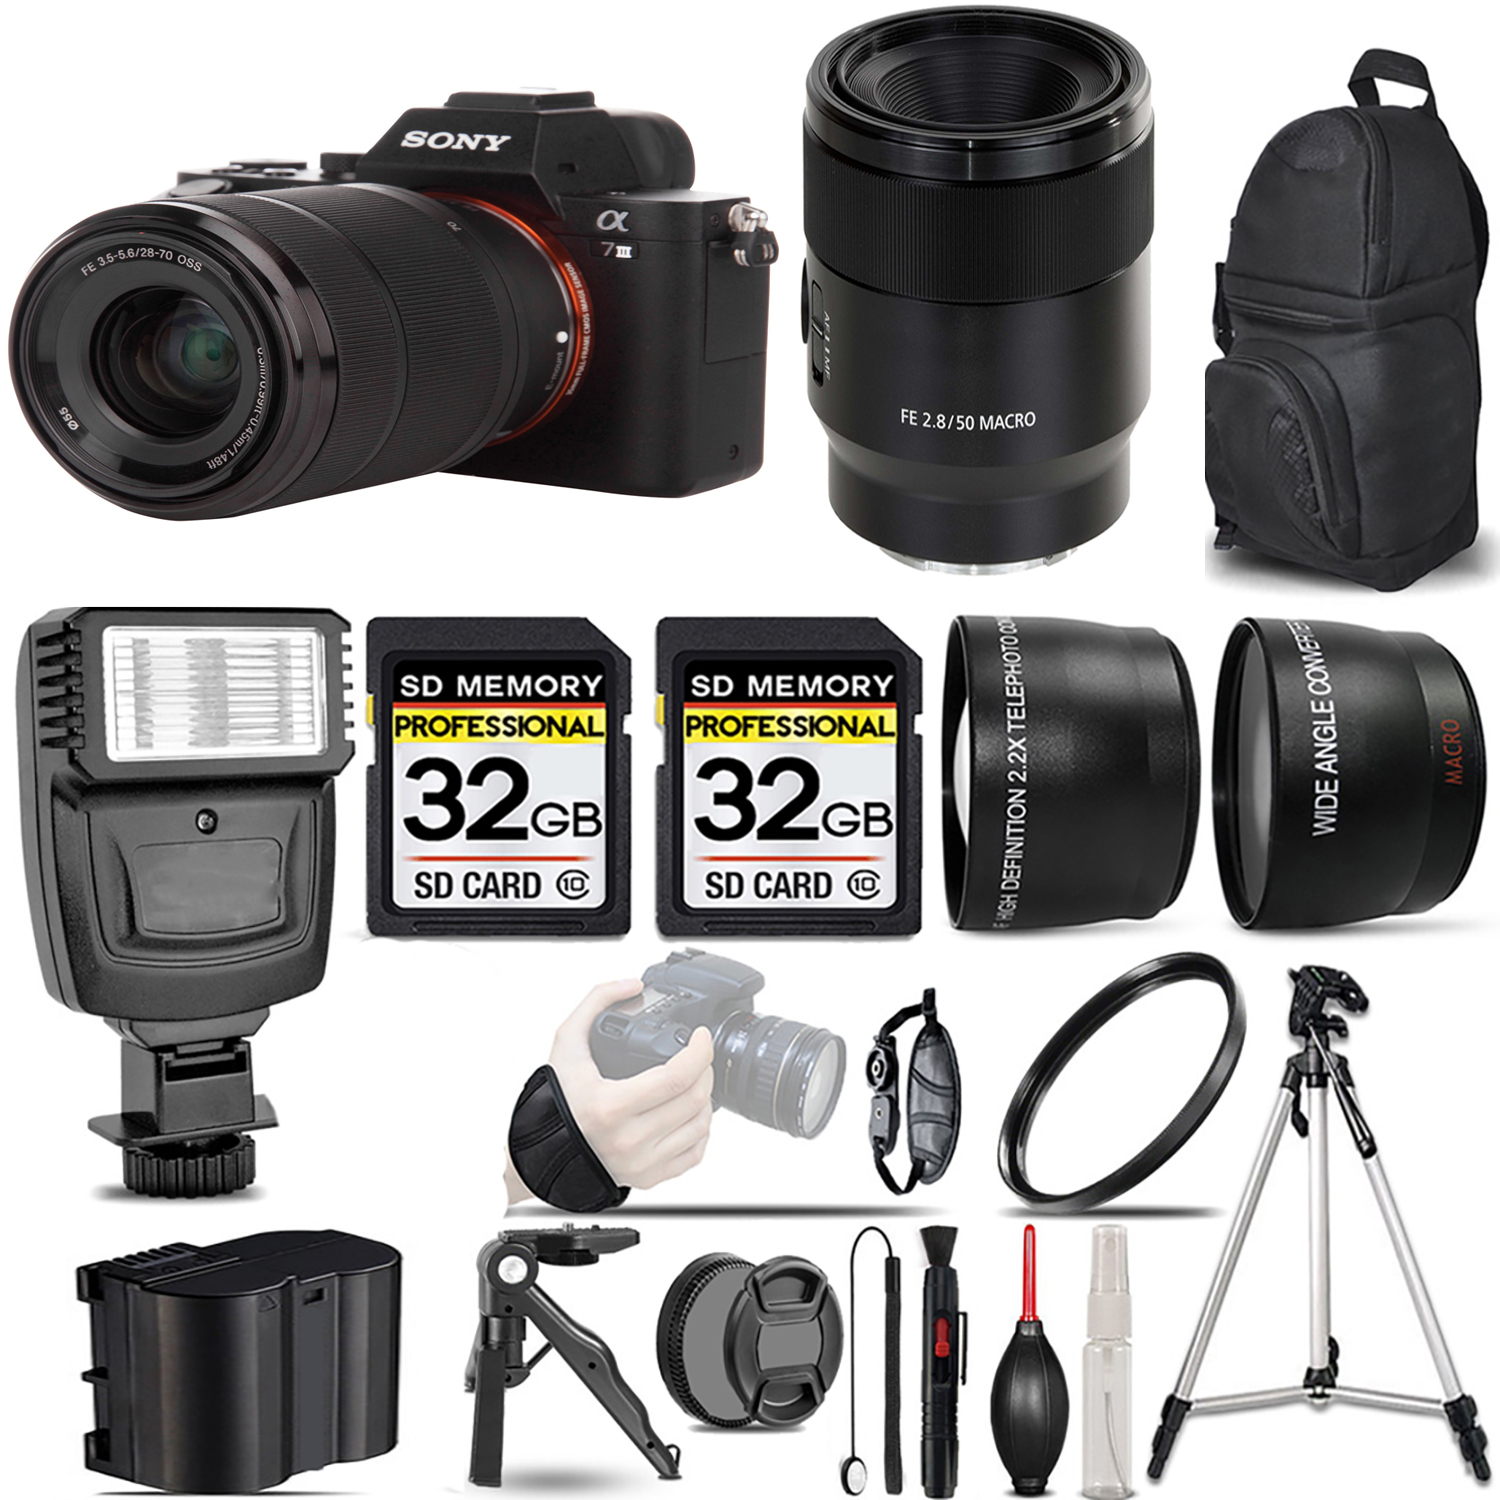 a7 III  Camera + 28-70mm Lens + 50mm f/2.8 Macro Lens + Flash + 64GB + UV Filter *FREE SHIPPING*